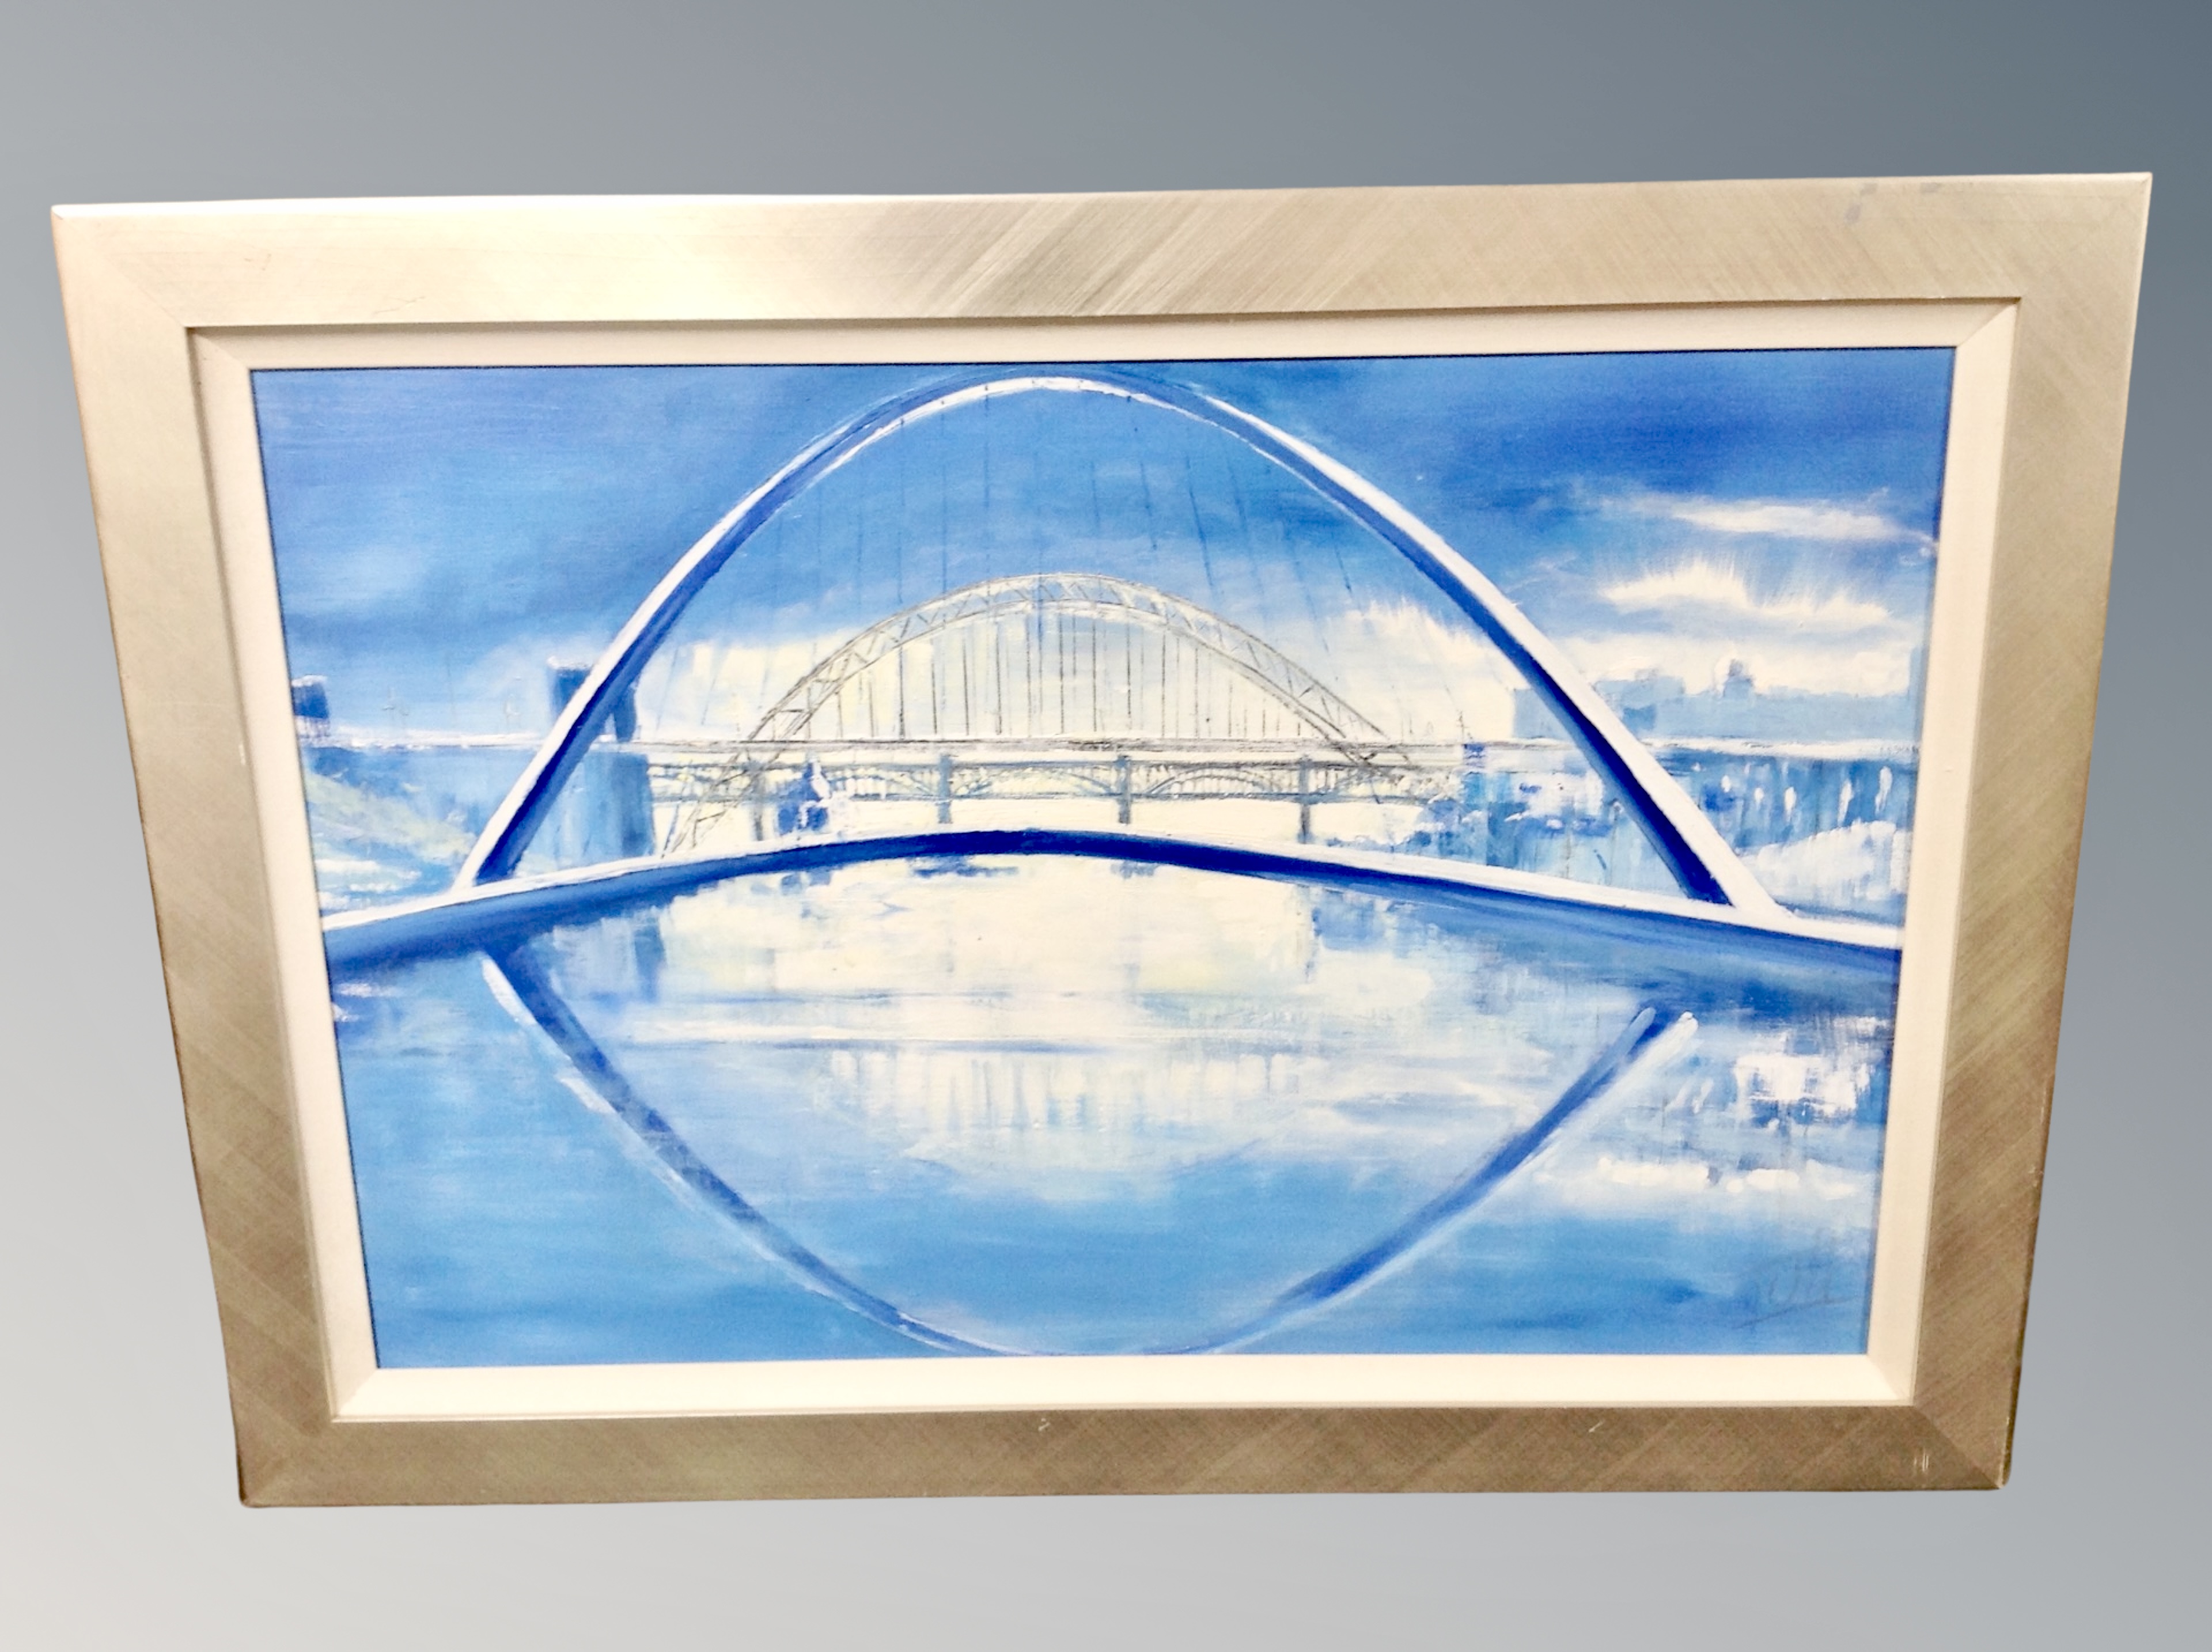 An oil on canvas depicting the Newcastle Tyne and Millennium Bridges